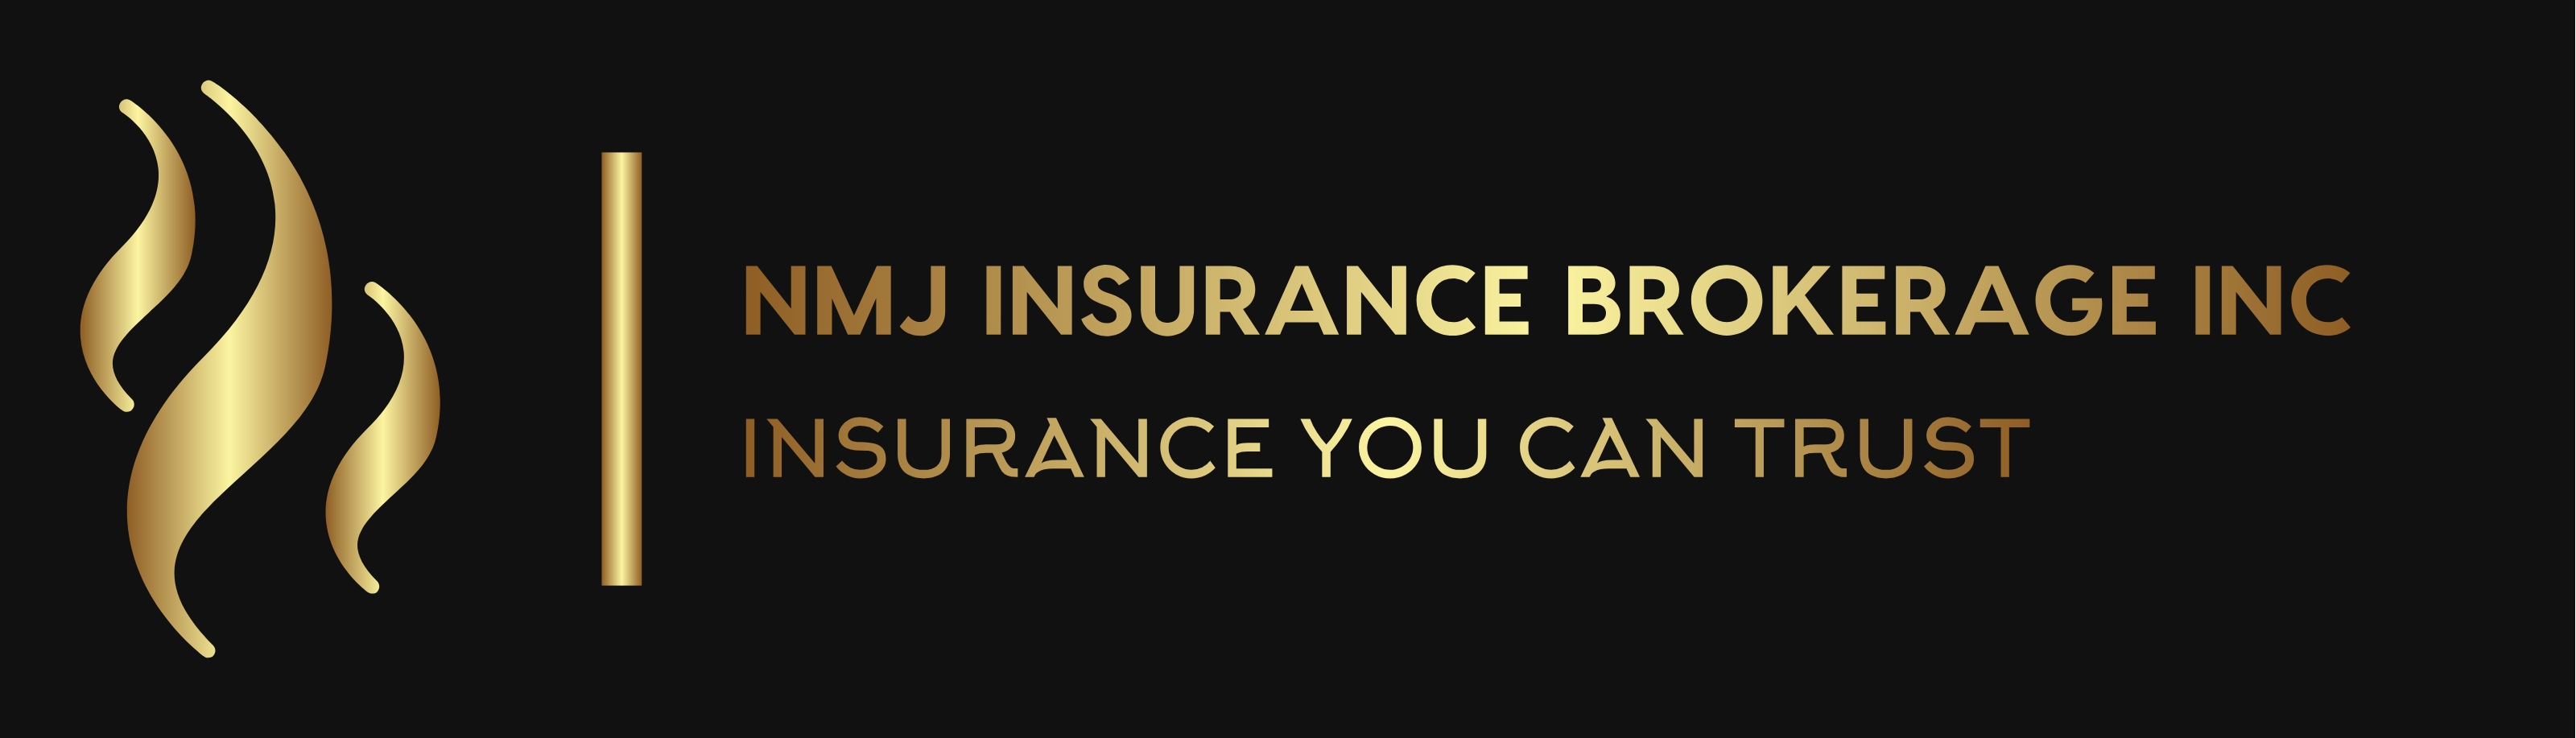 NMJ Insurance Brokerage Inc